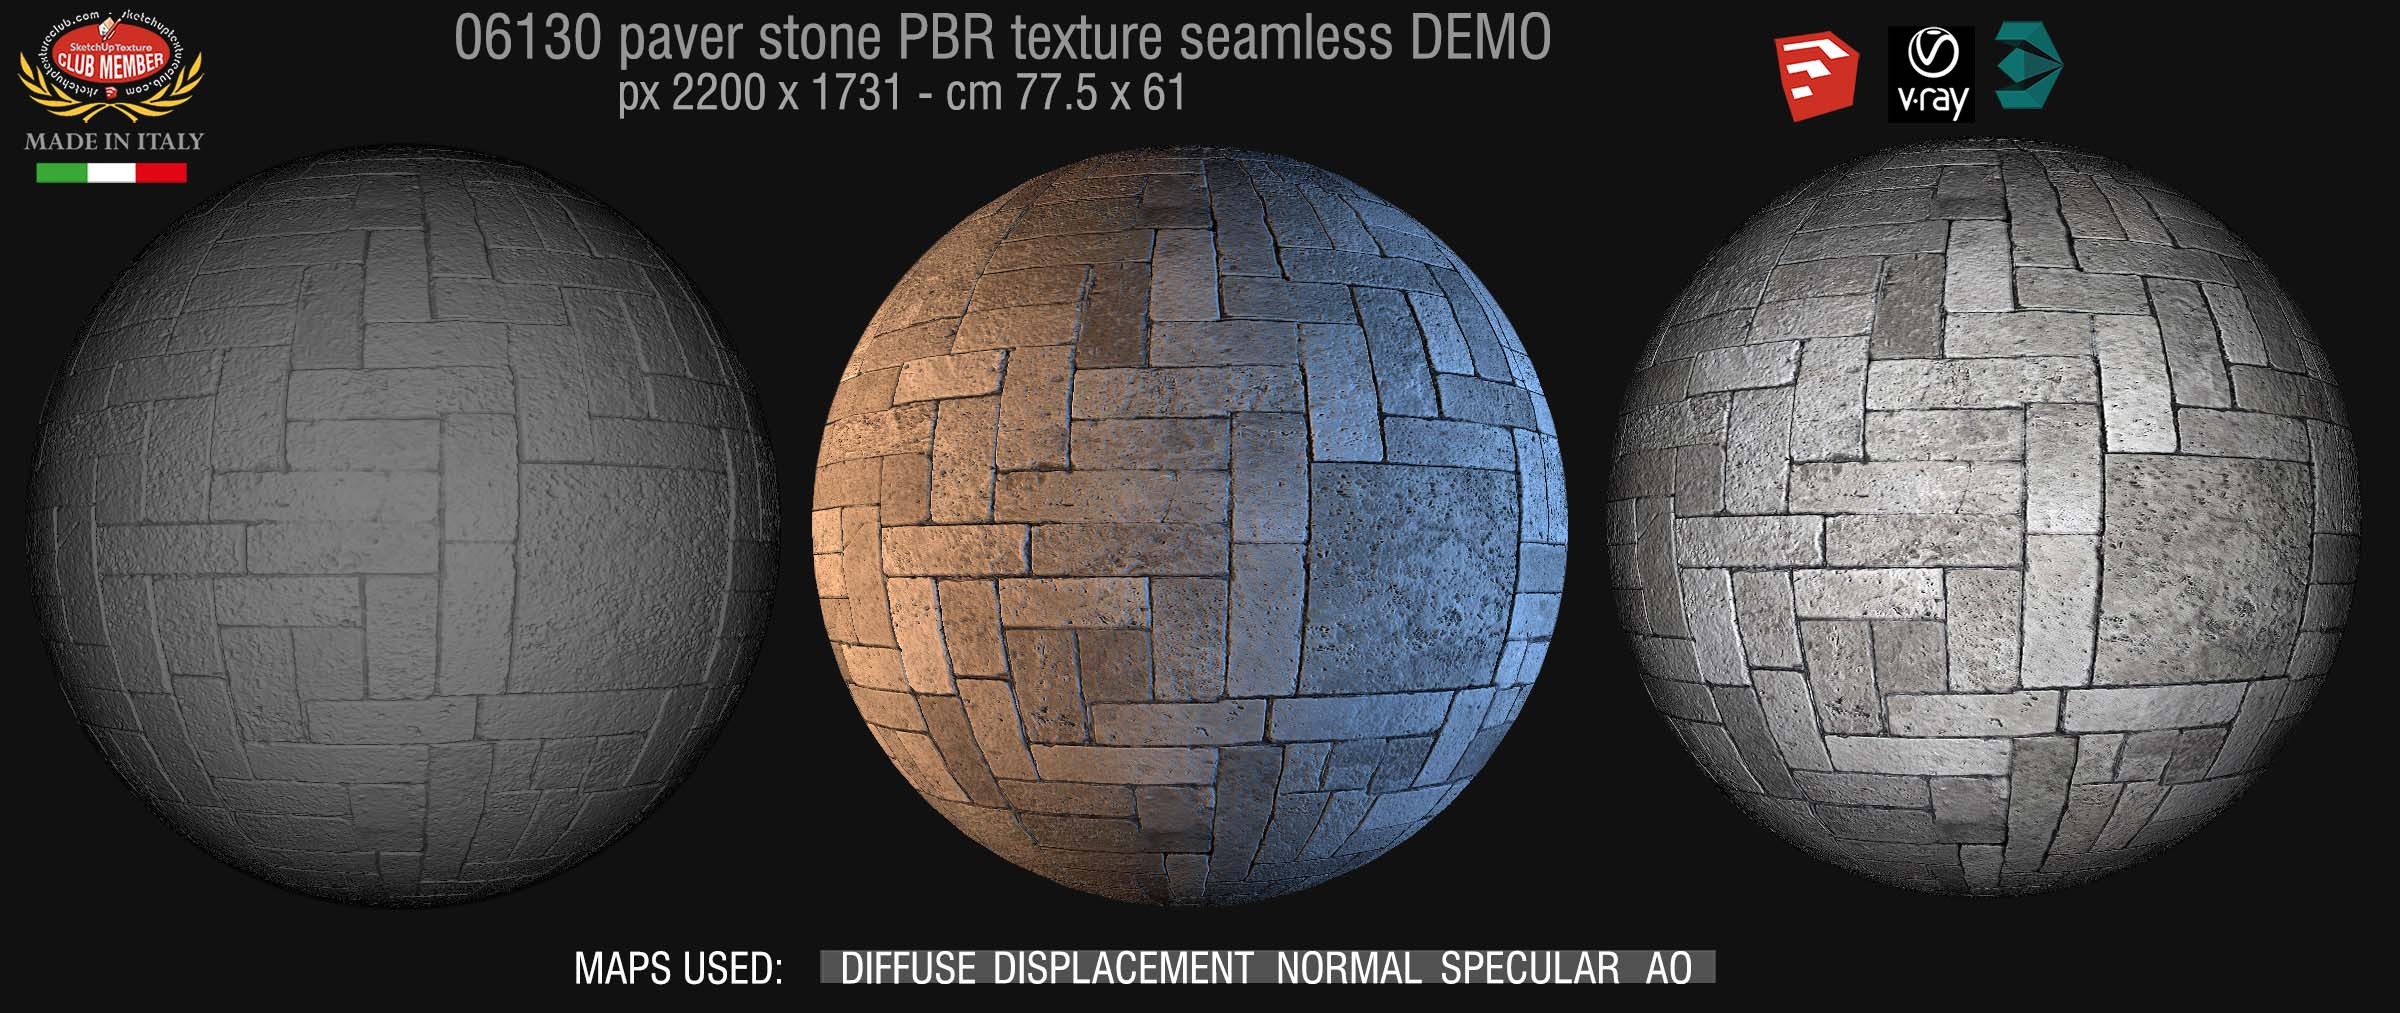 06130 paver stone PBR texture seamless DEMO